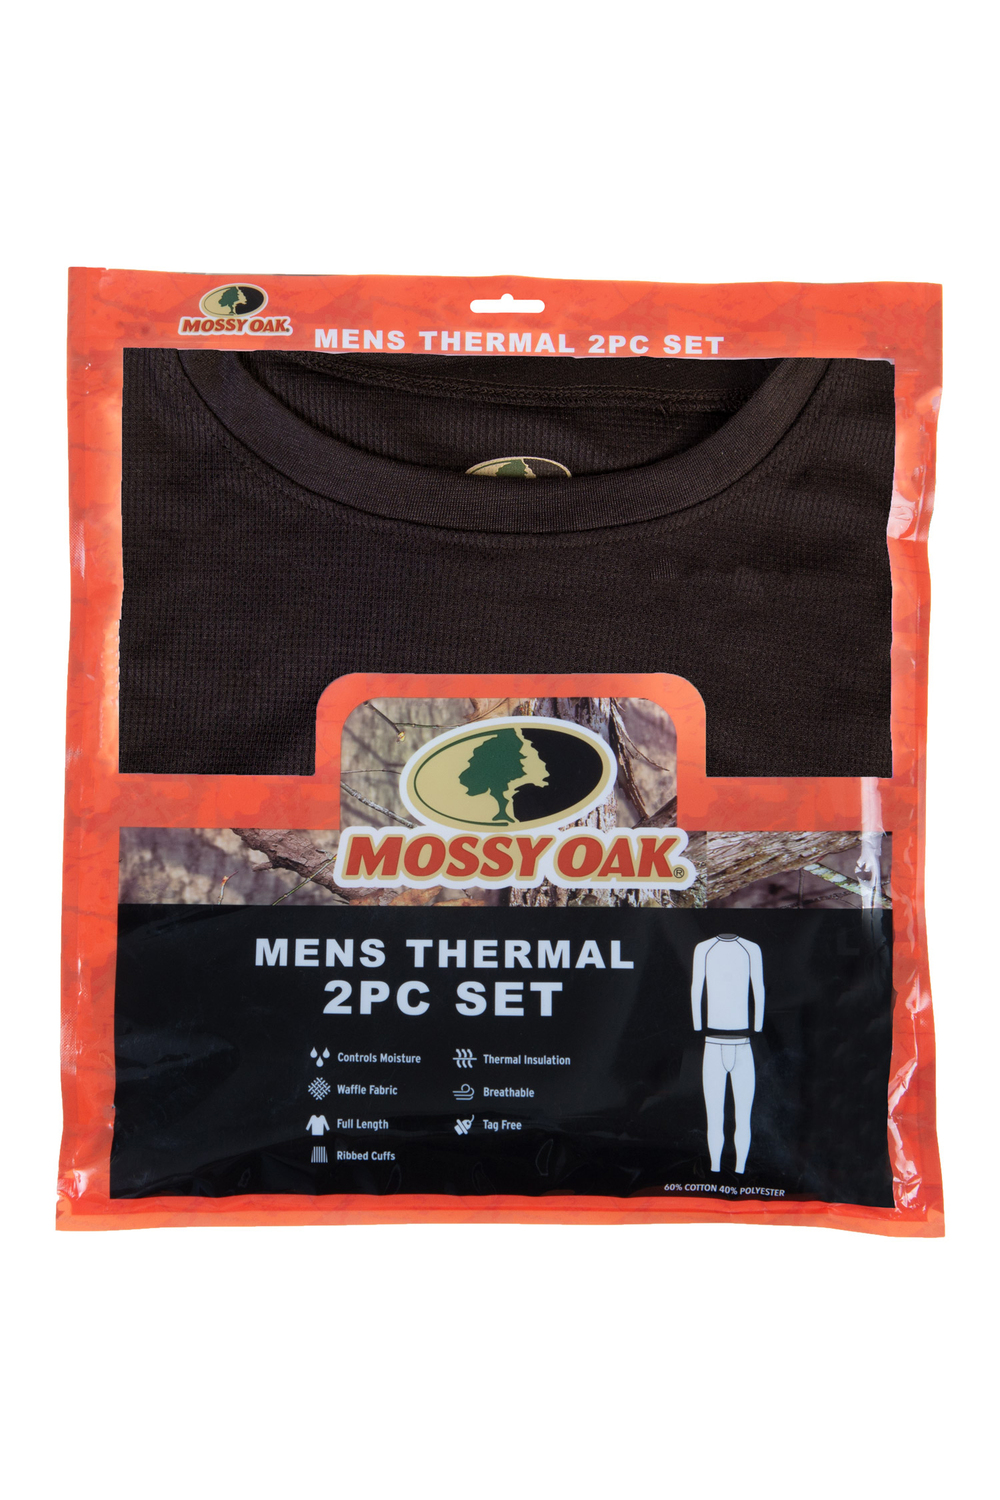 Mossy Oak - Men's 2 piece thermal set, black, extra large (XL)